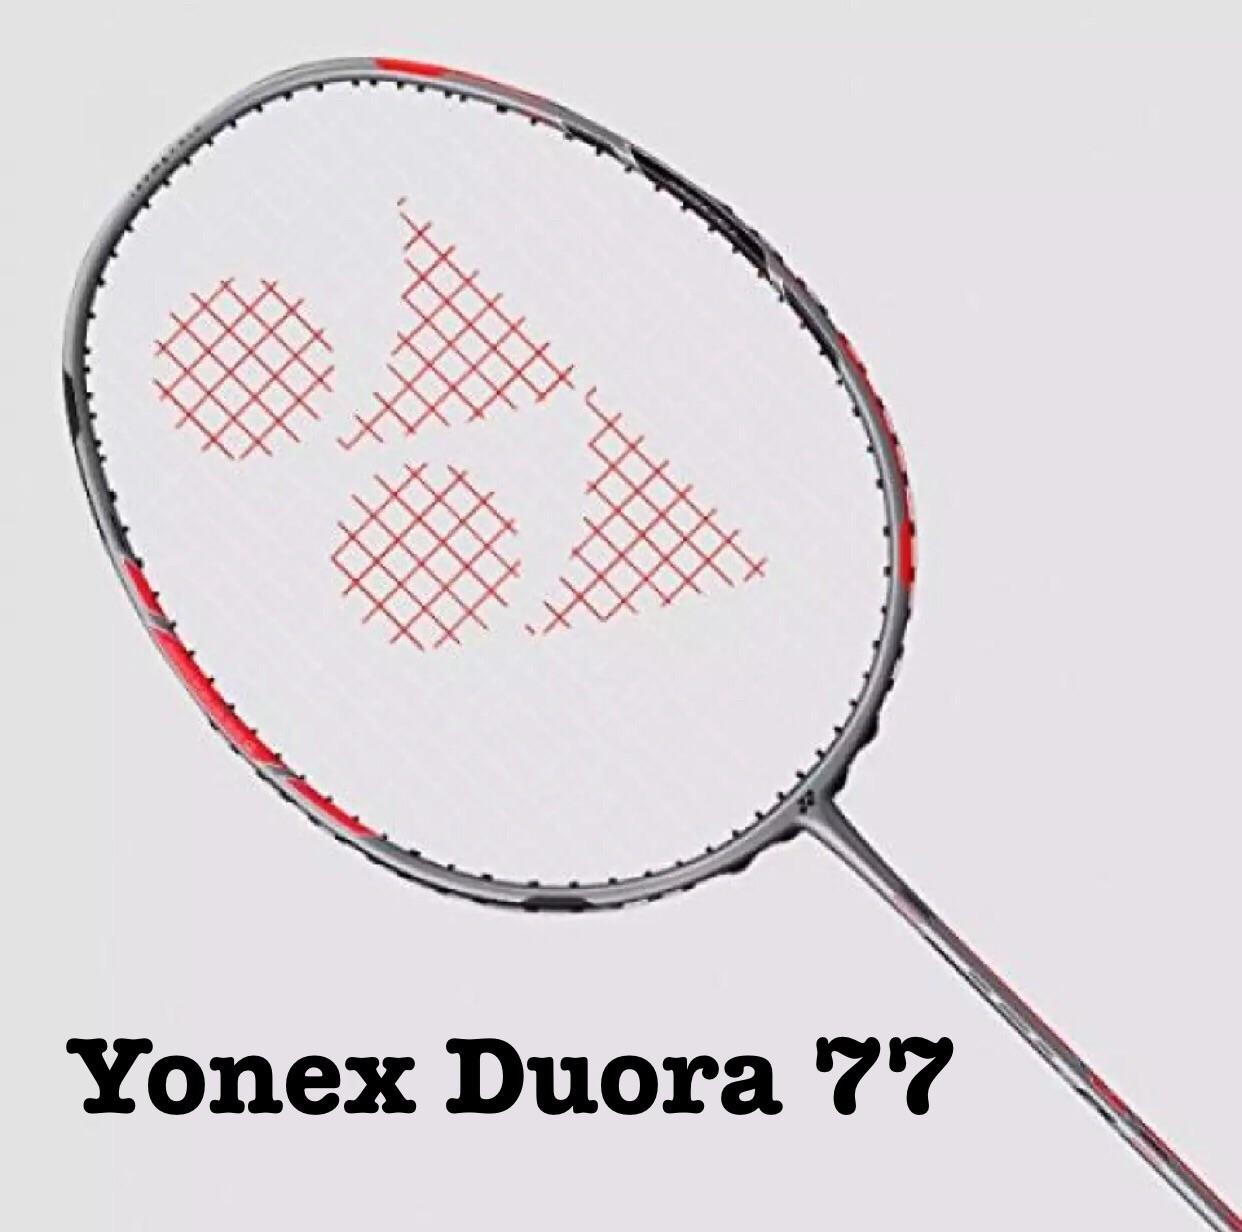 Original Yonex Duora 77 badminton racket with free string and free grip